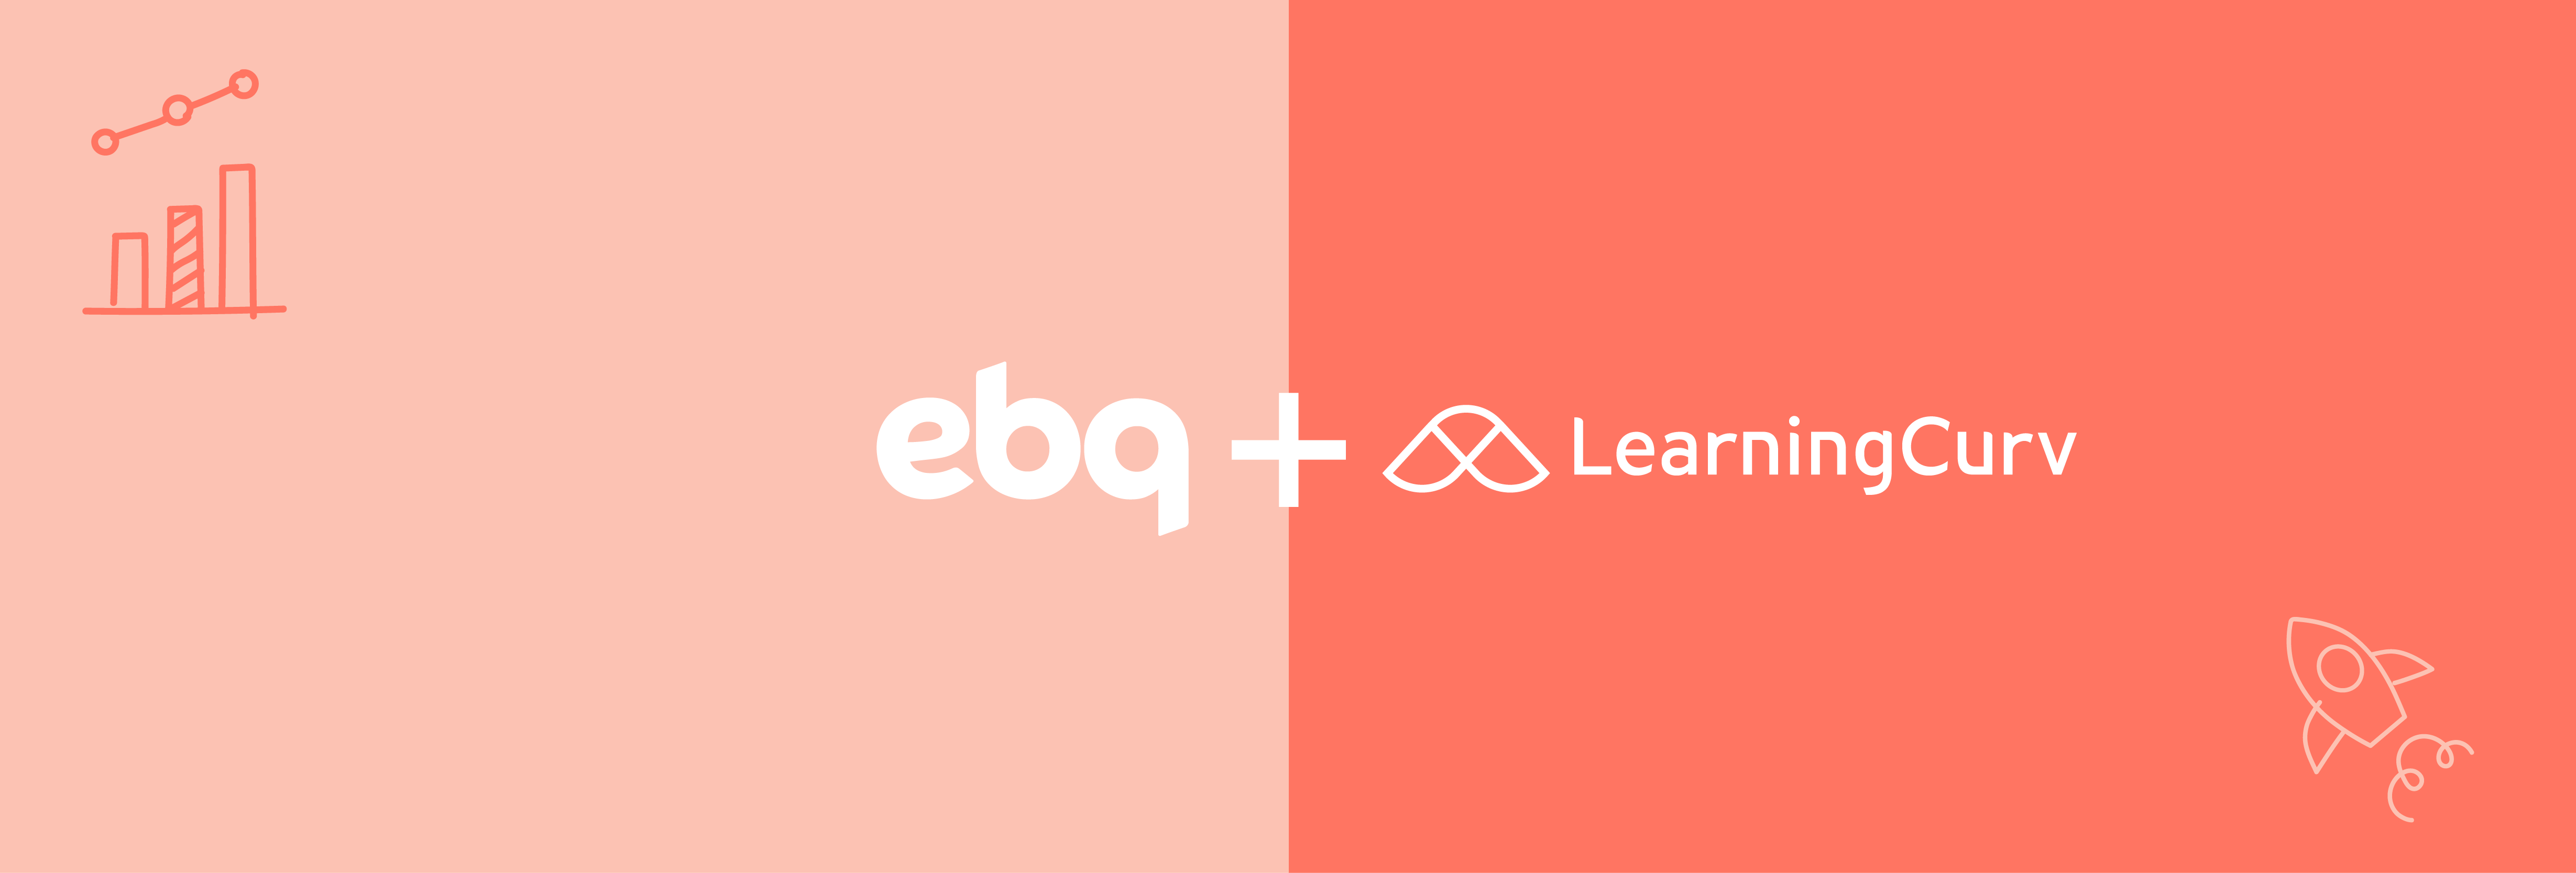 EBQ Aquires LearningCurv